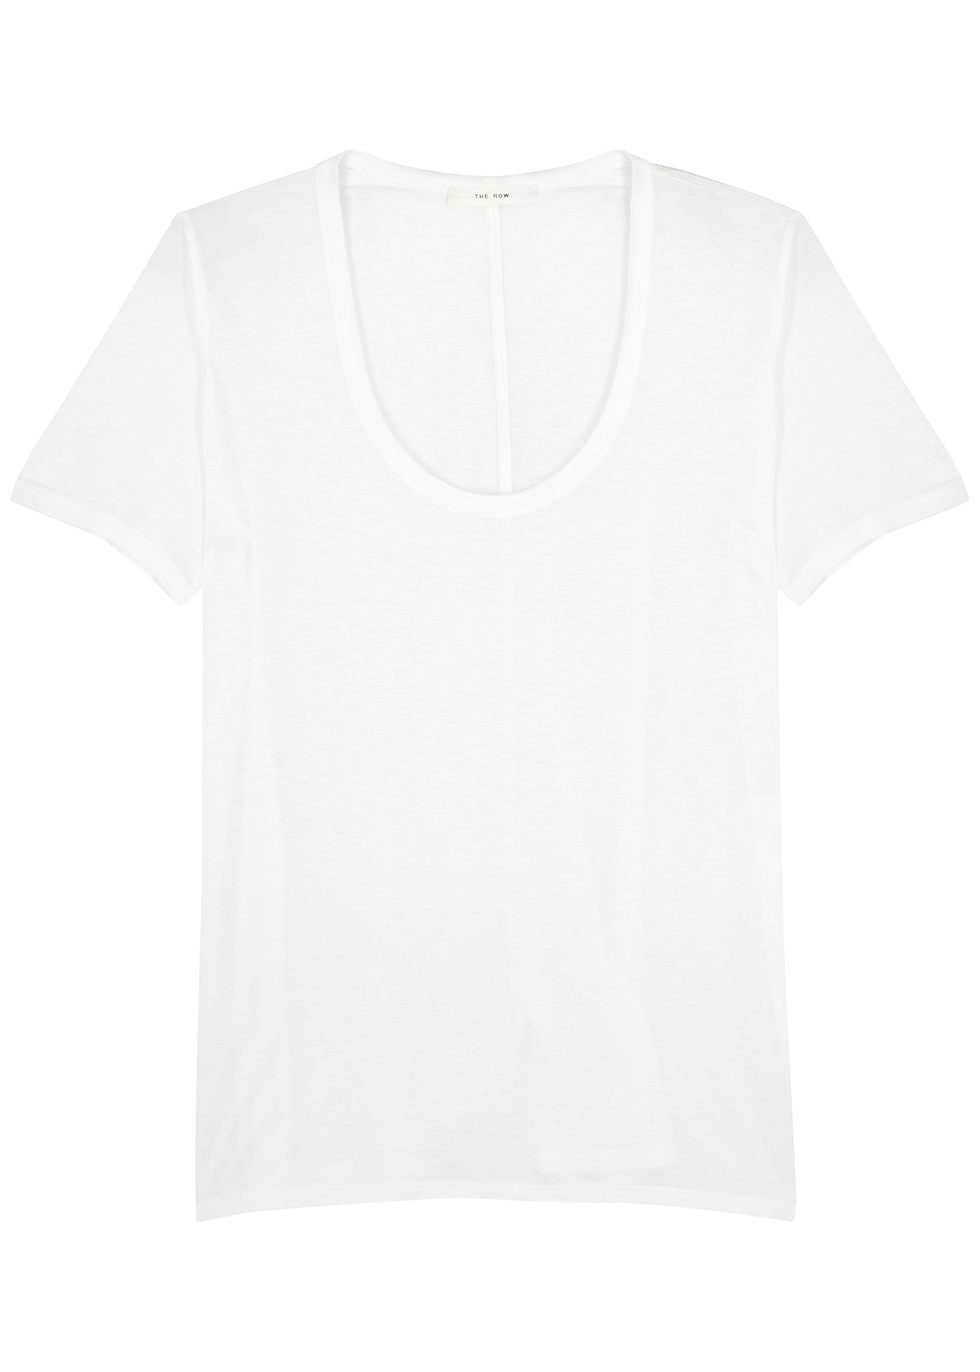 Stilton white jersey T-shirt